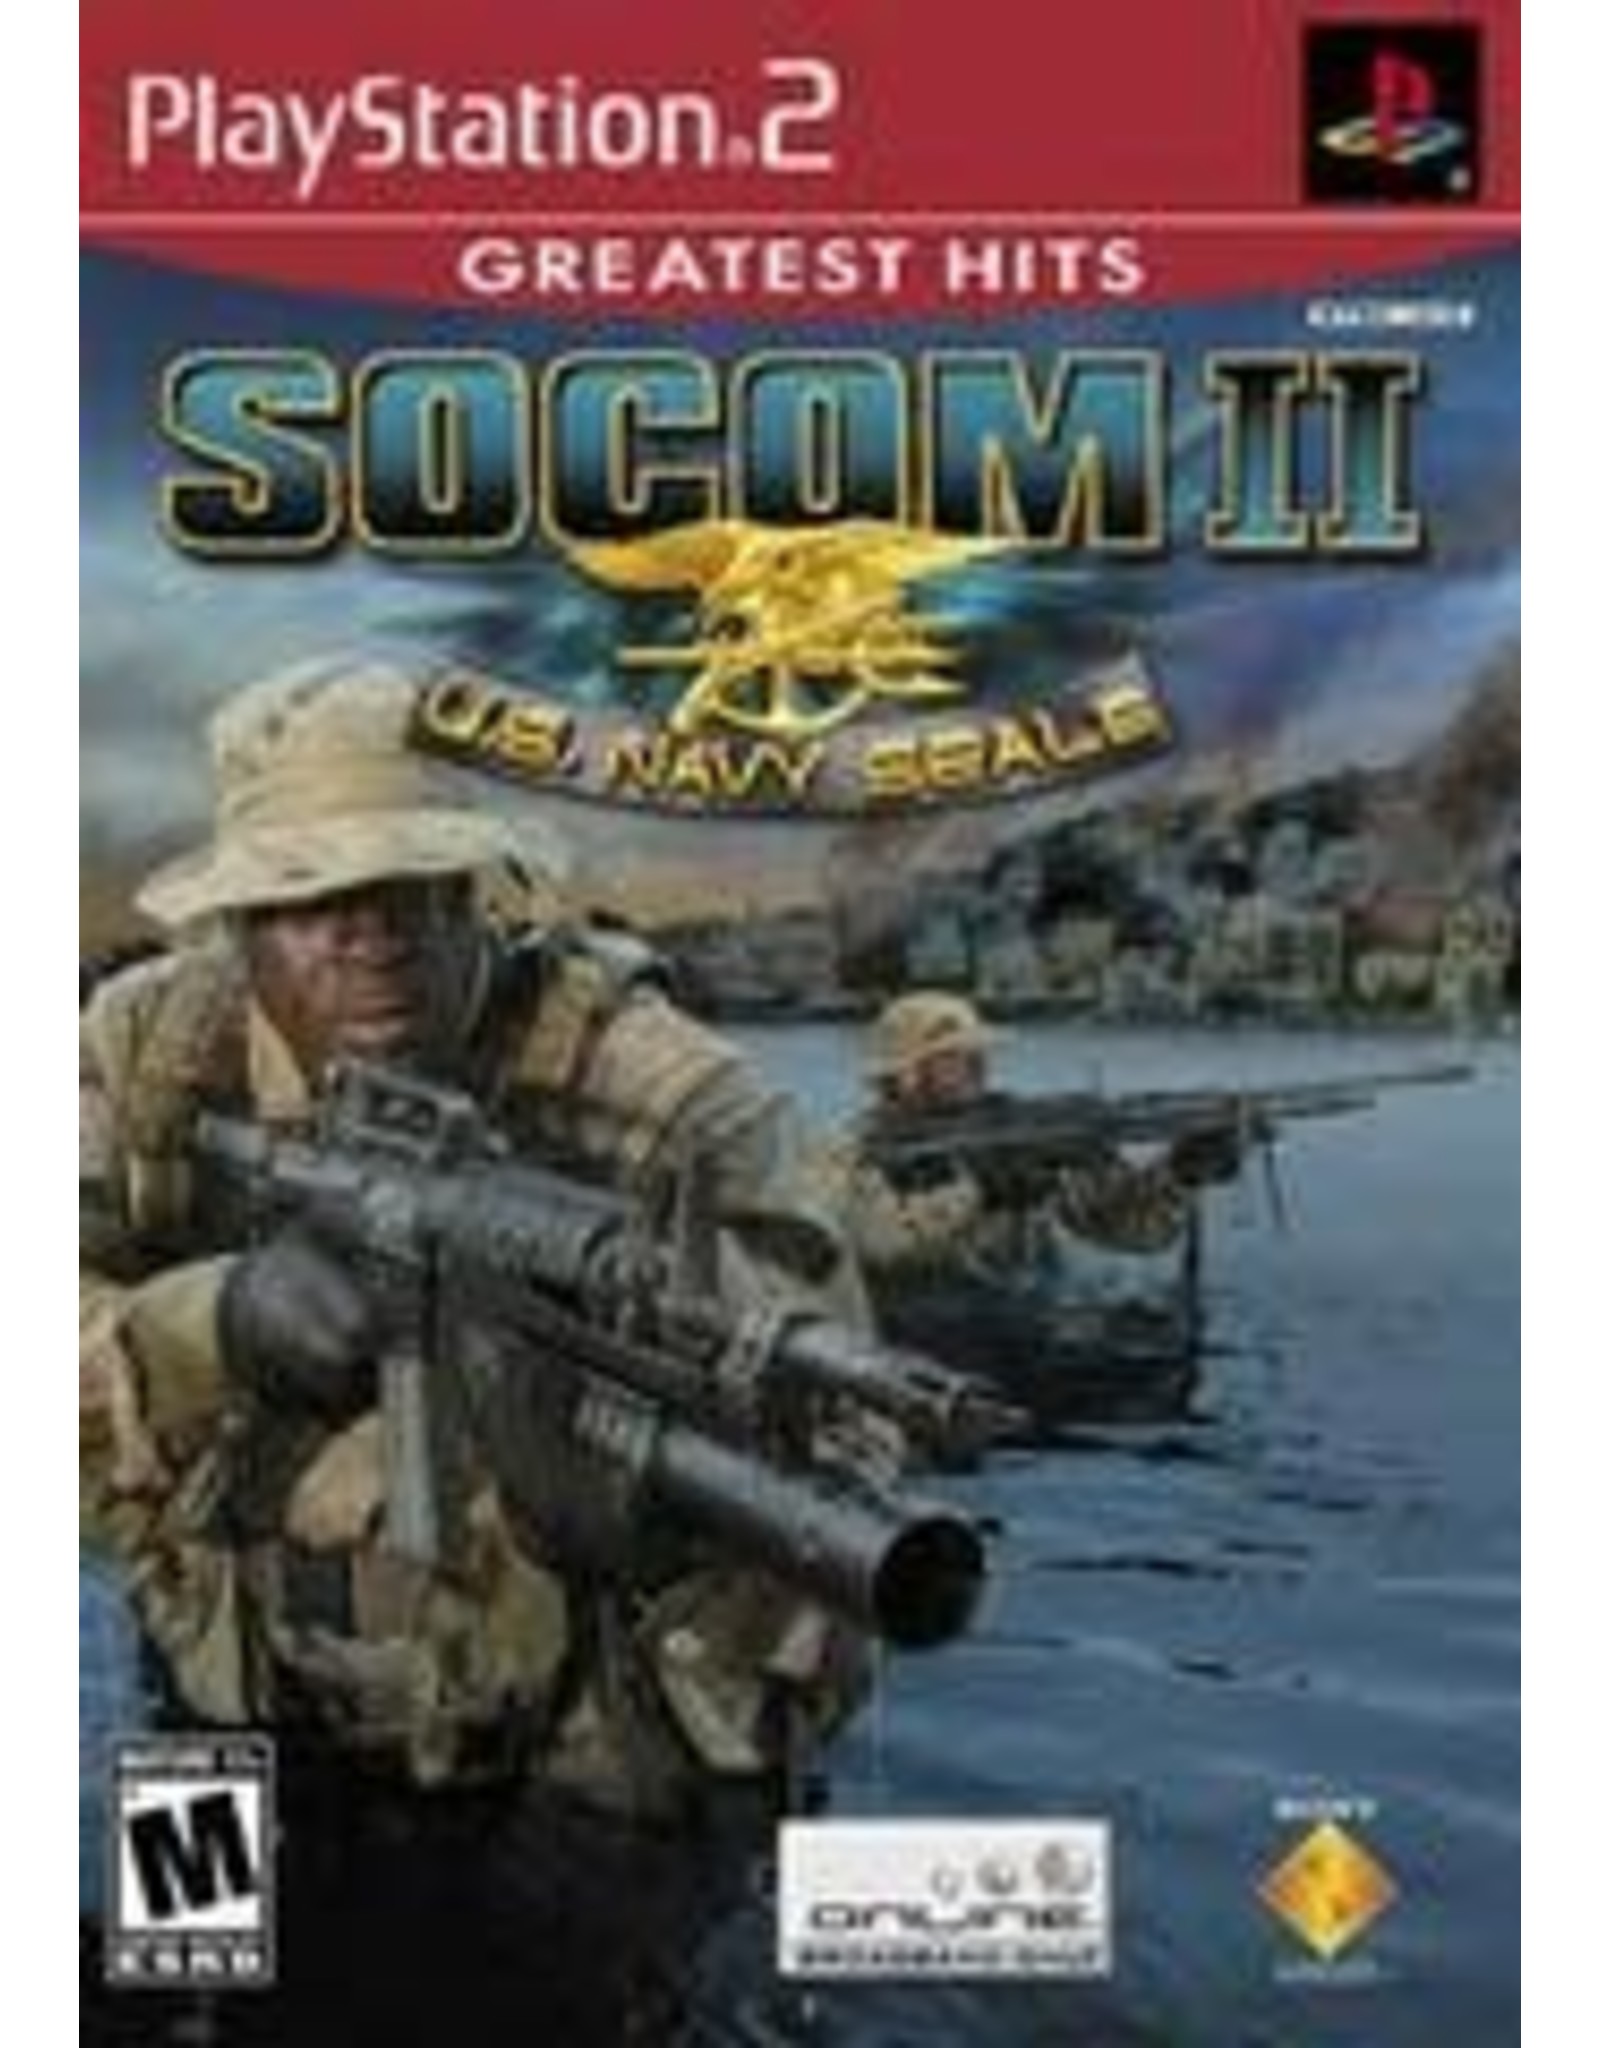 Playstation 2 SOCOM II US Navy Seals (Greatest Hits, No Manual)